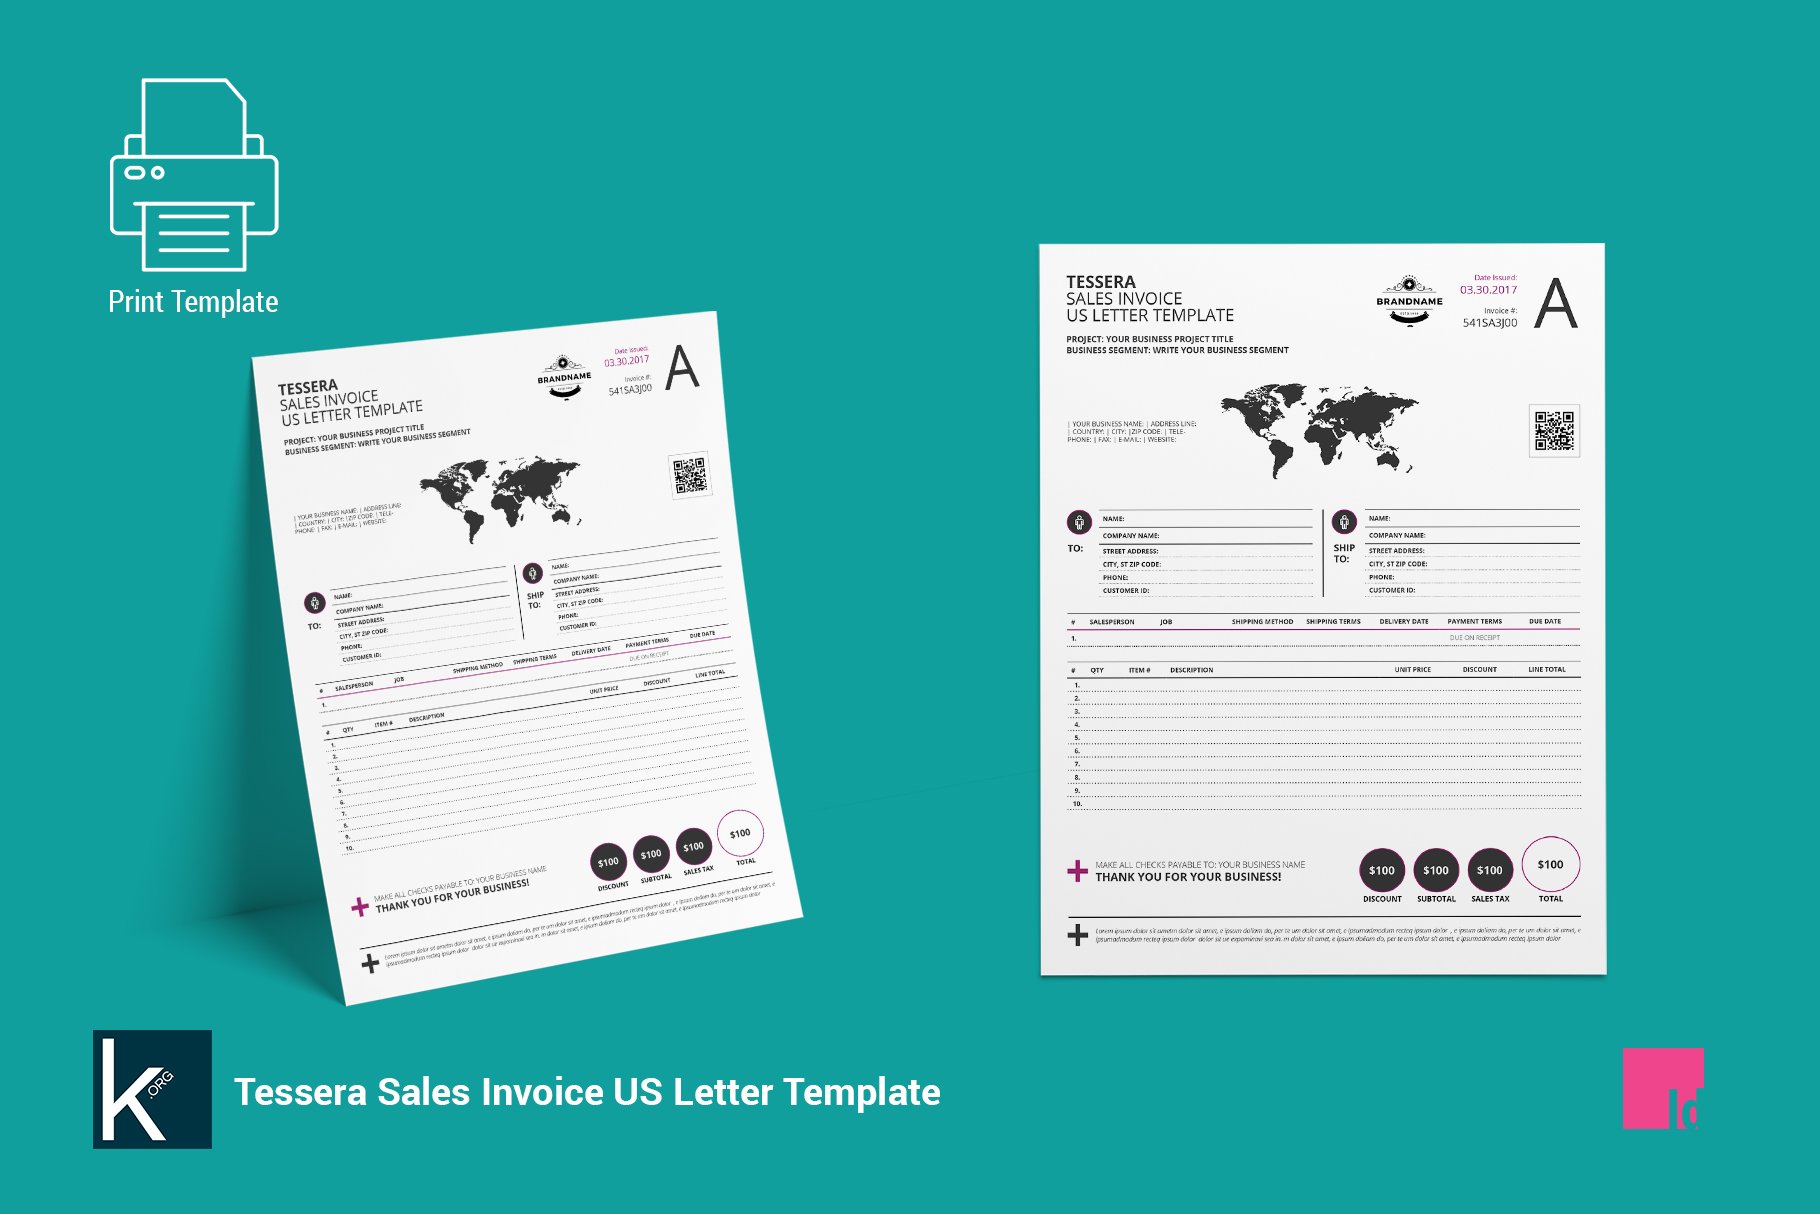 Tessera Sales Invoice US Letter cover image.